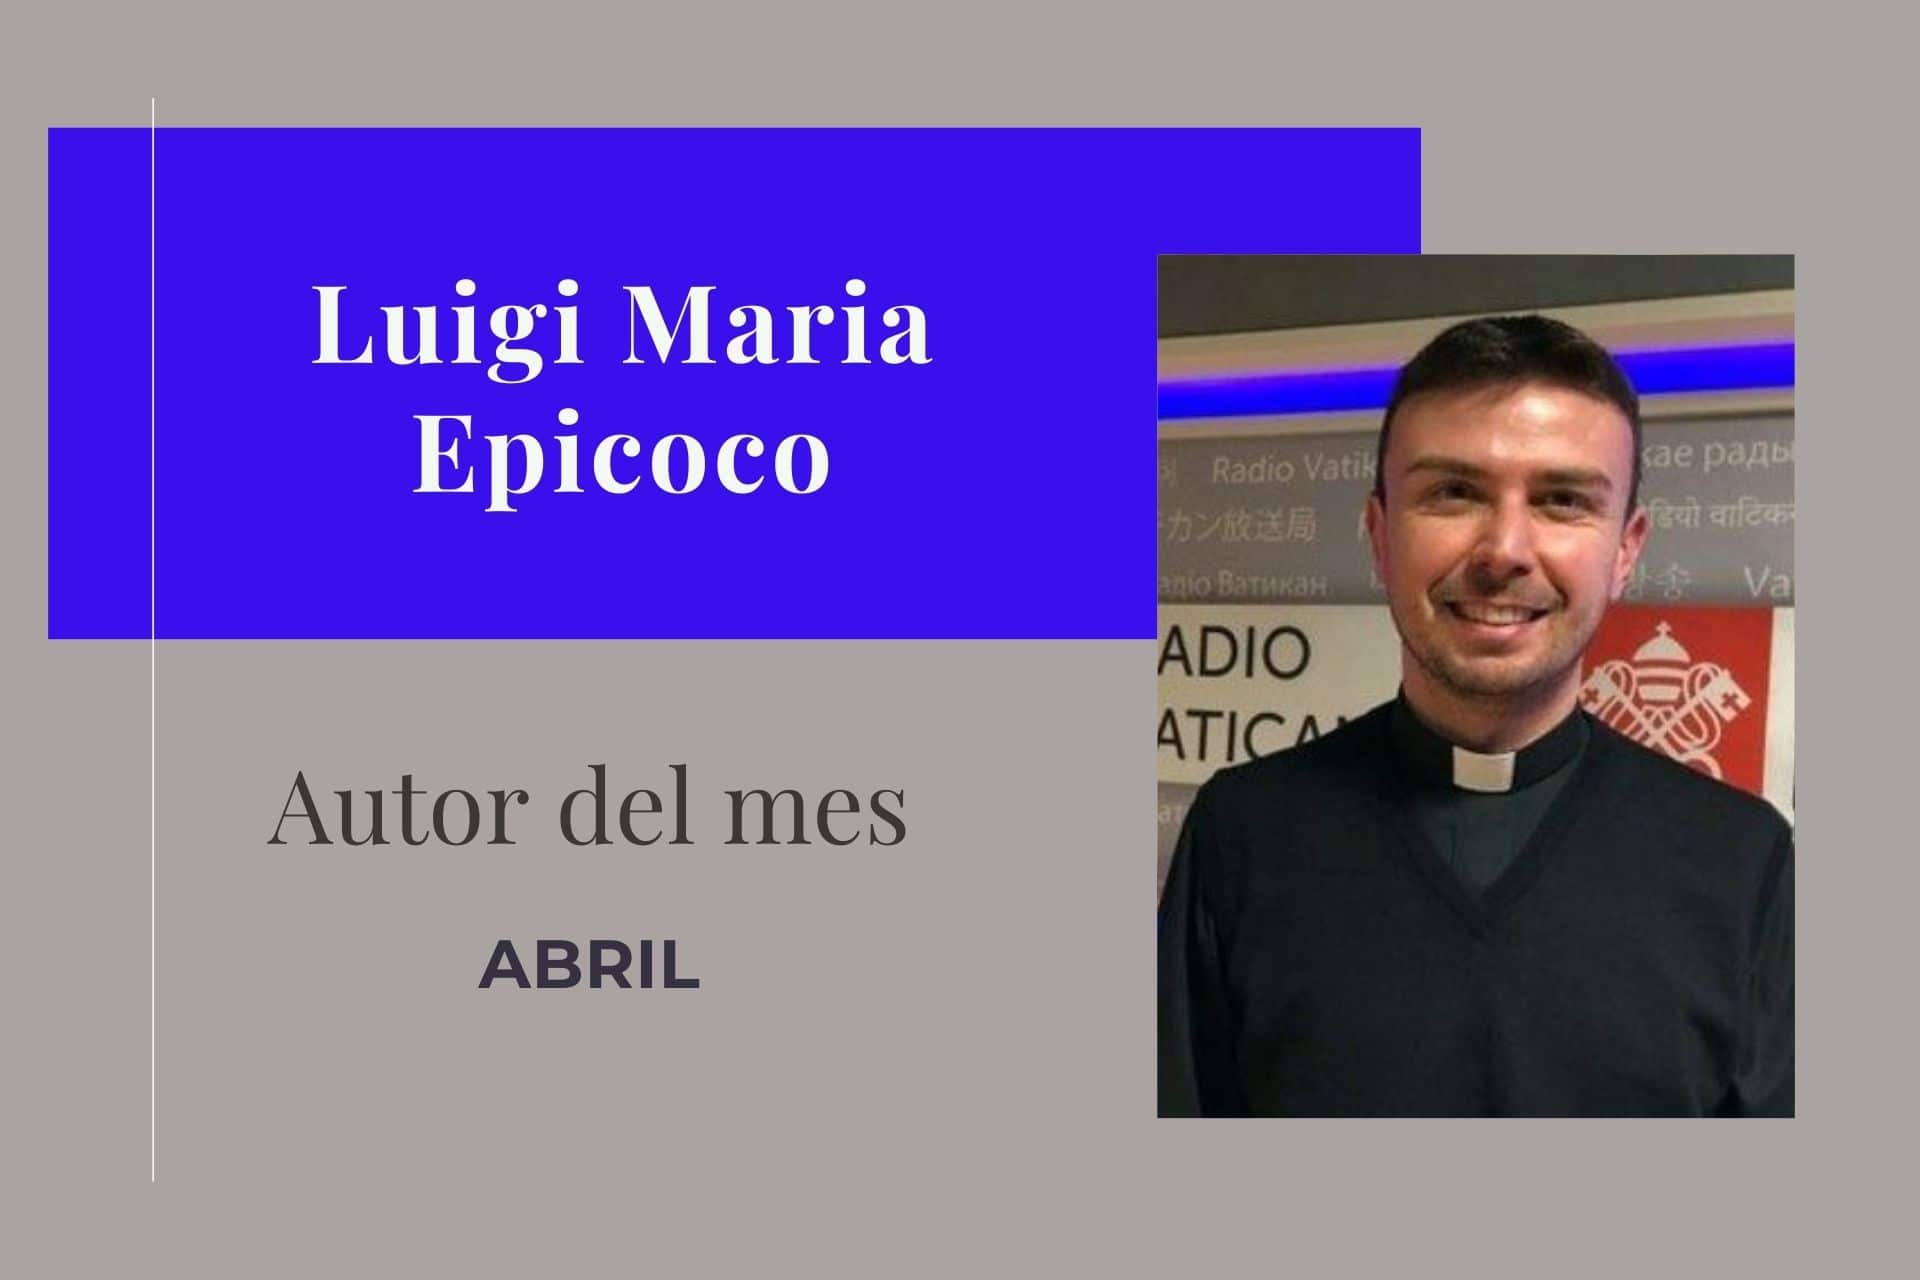 Luigi Maria Epicoco